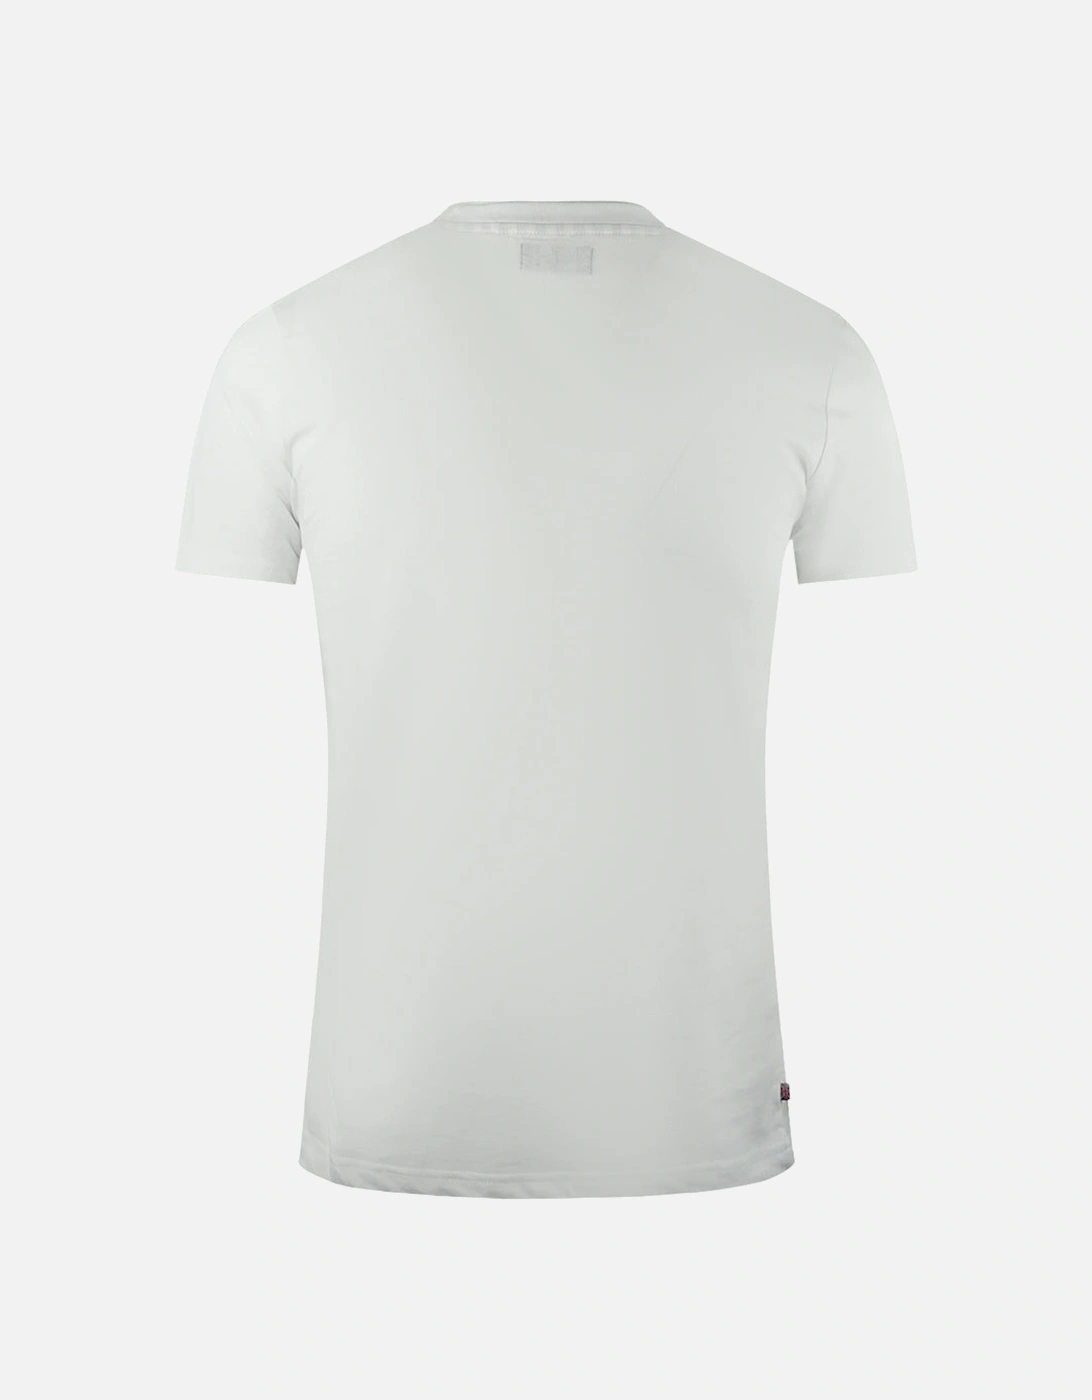 London Aldis Brand Logo White T-Shirt